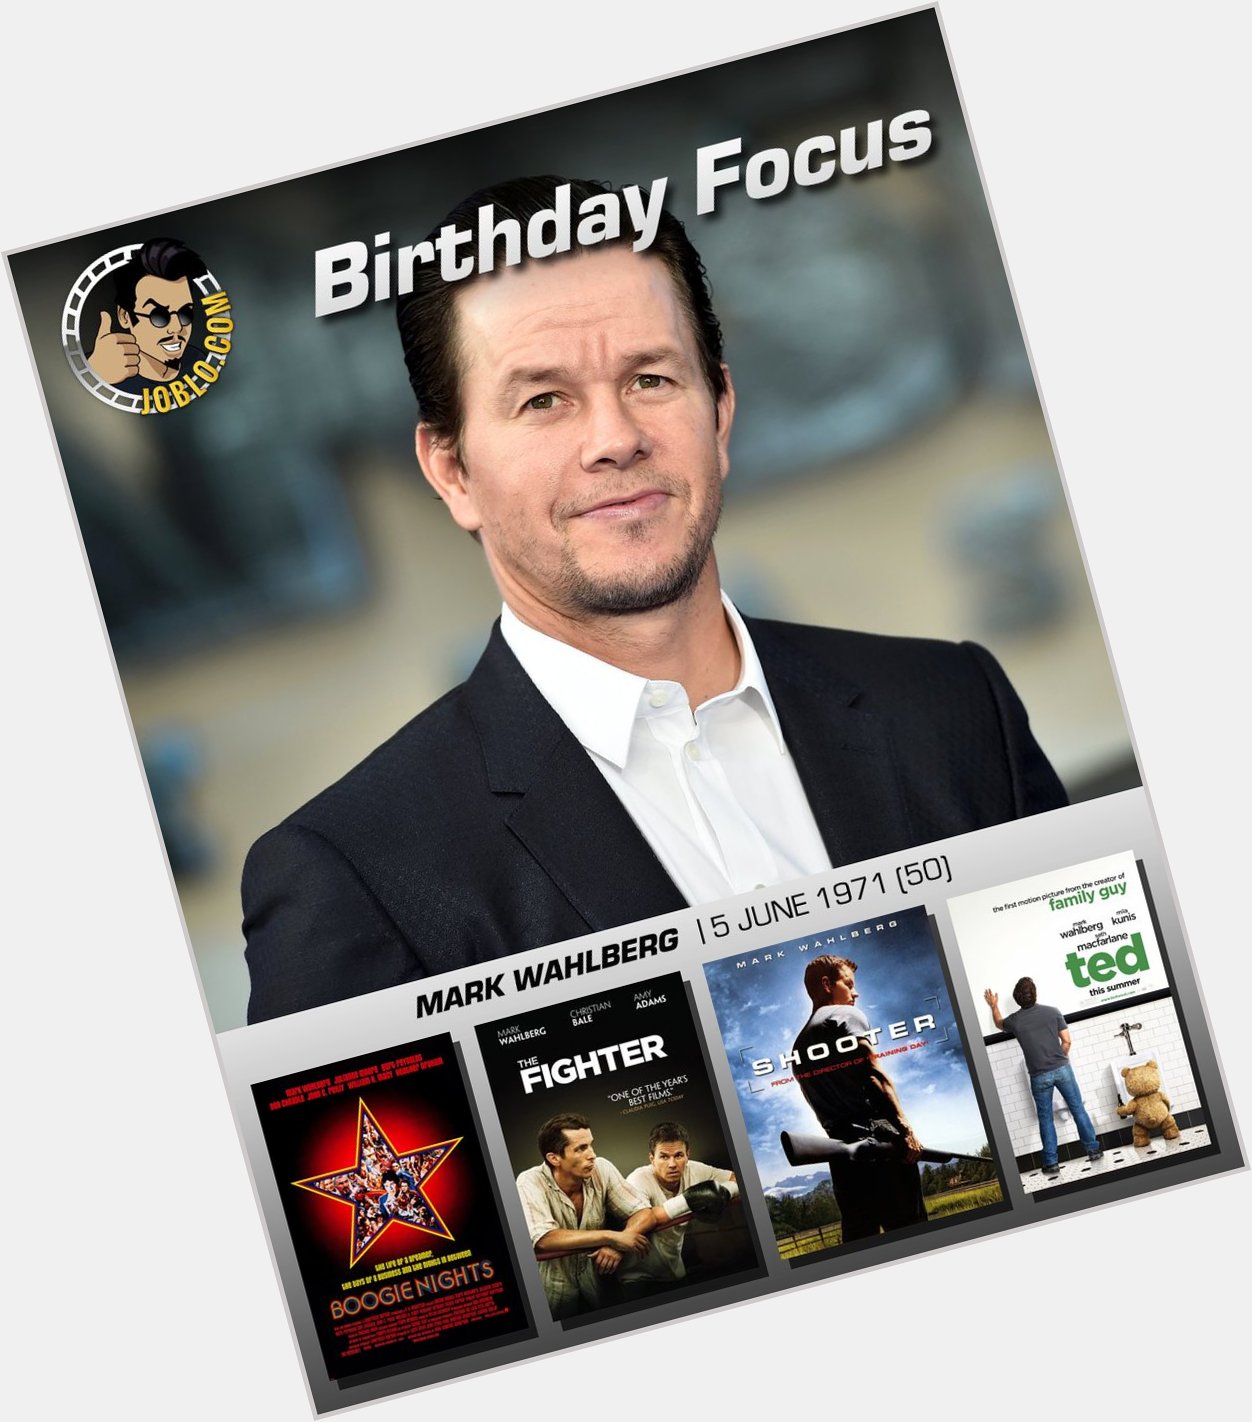 Wishing a very happy 50th birthday to Mark Wahlberg! 